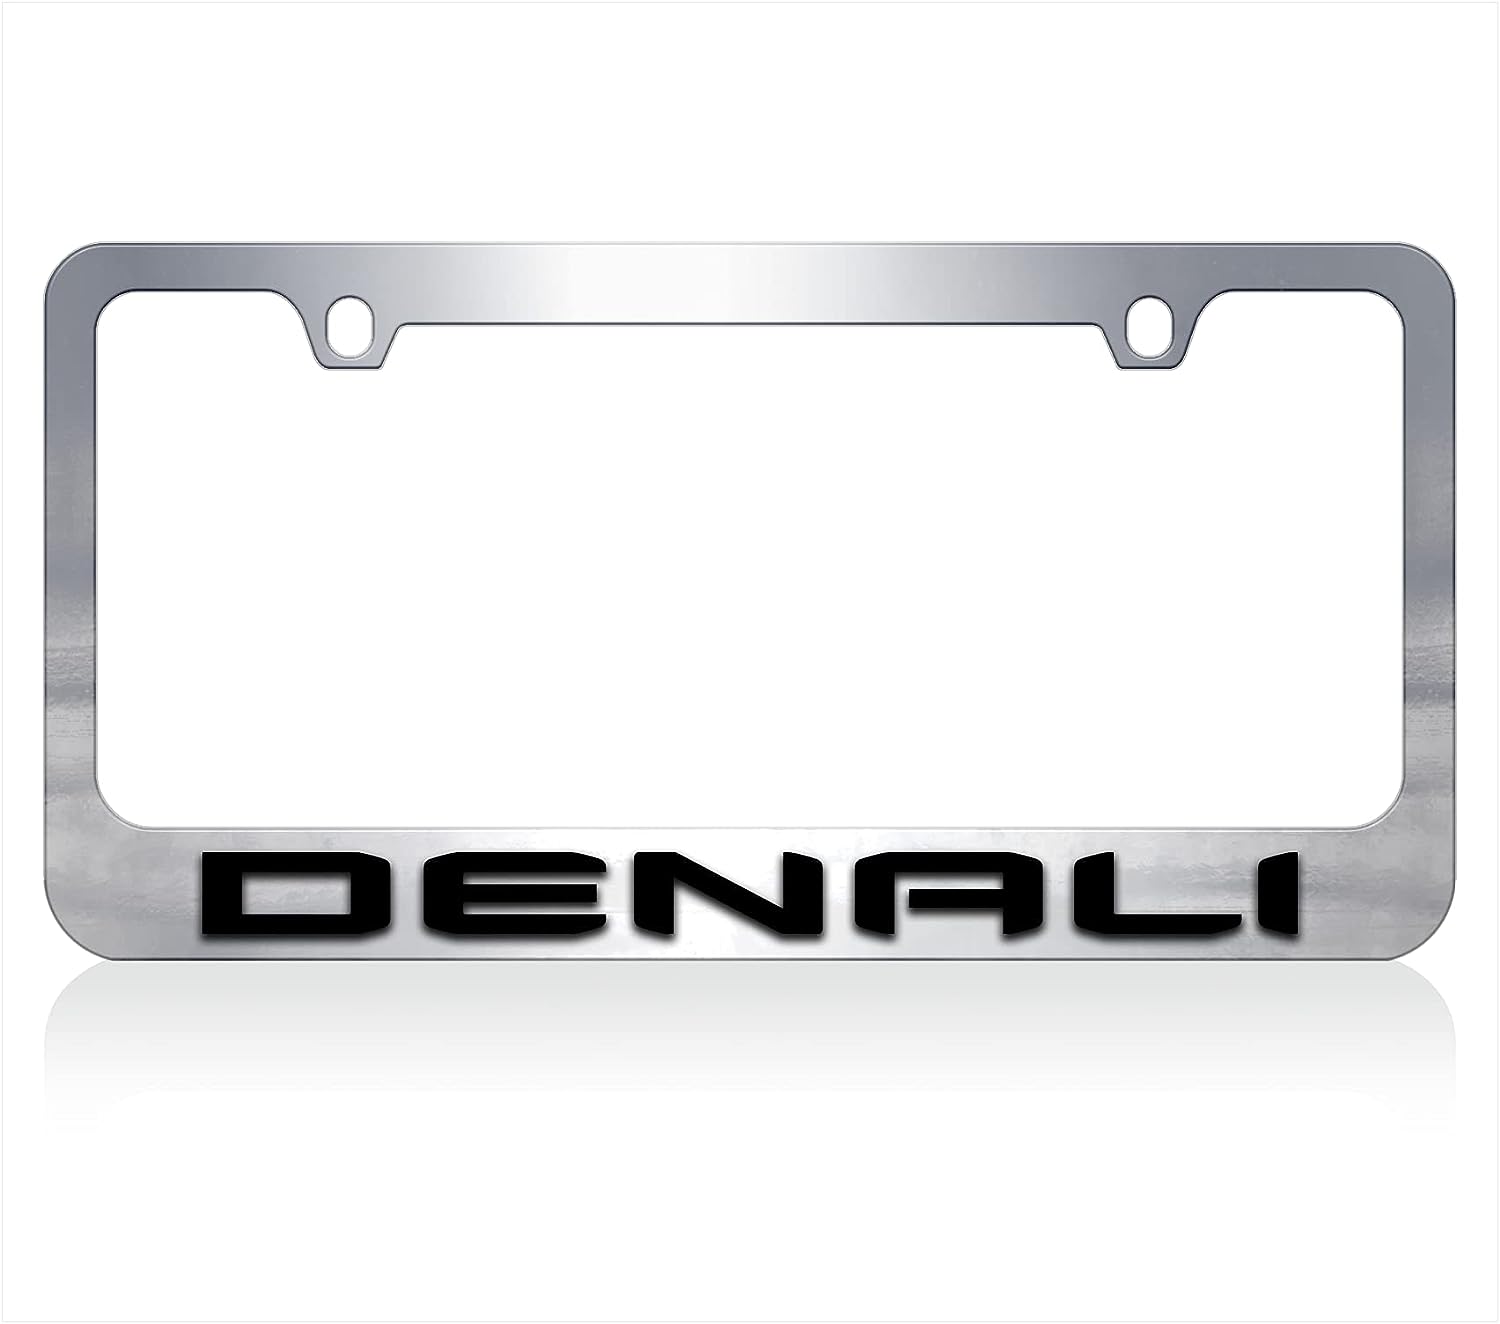 GMC Denali, 2019- Current, Chrome License Plate Frame